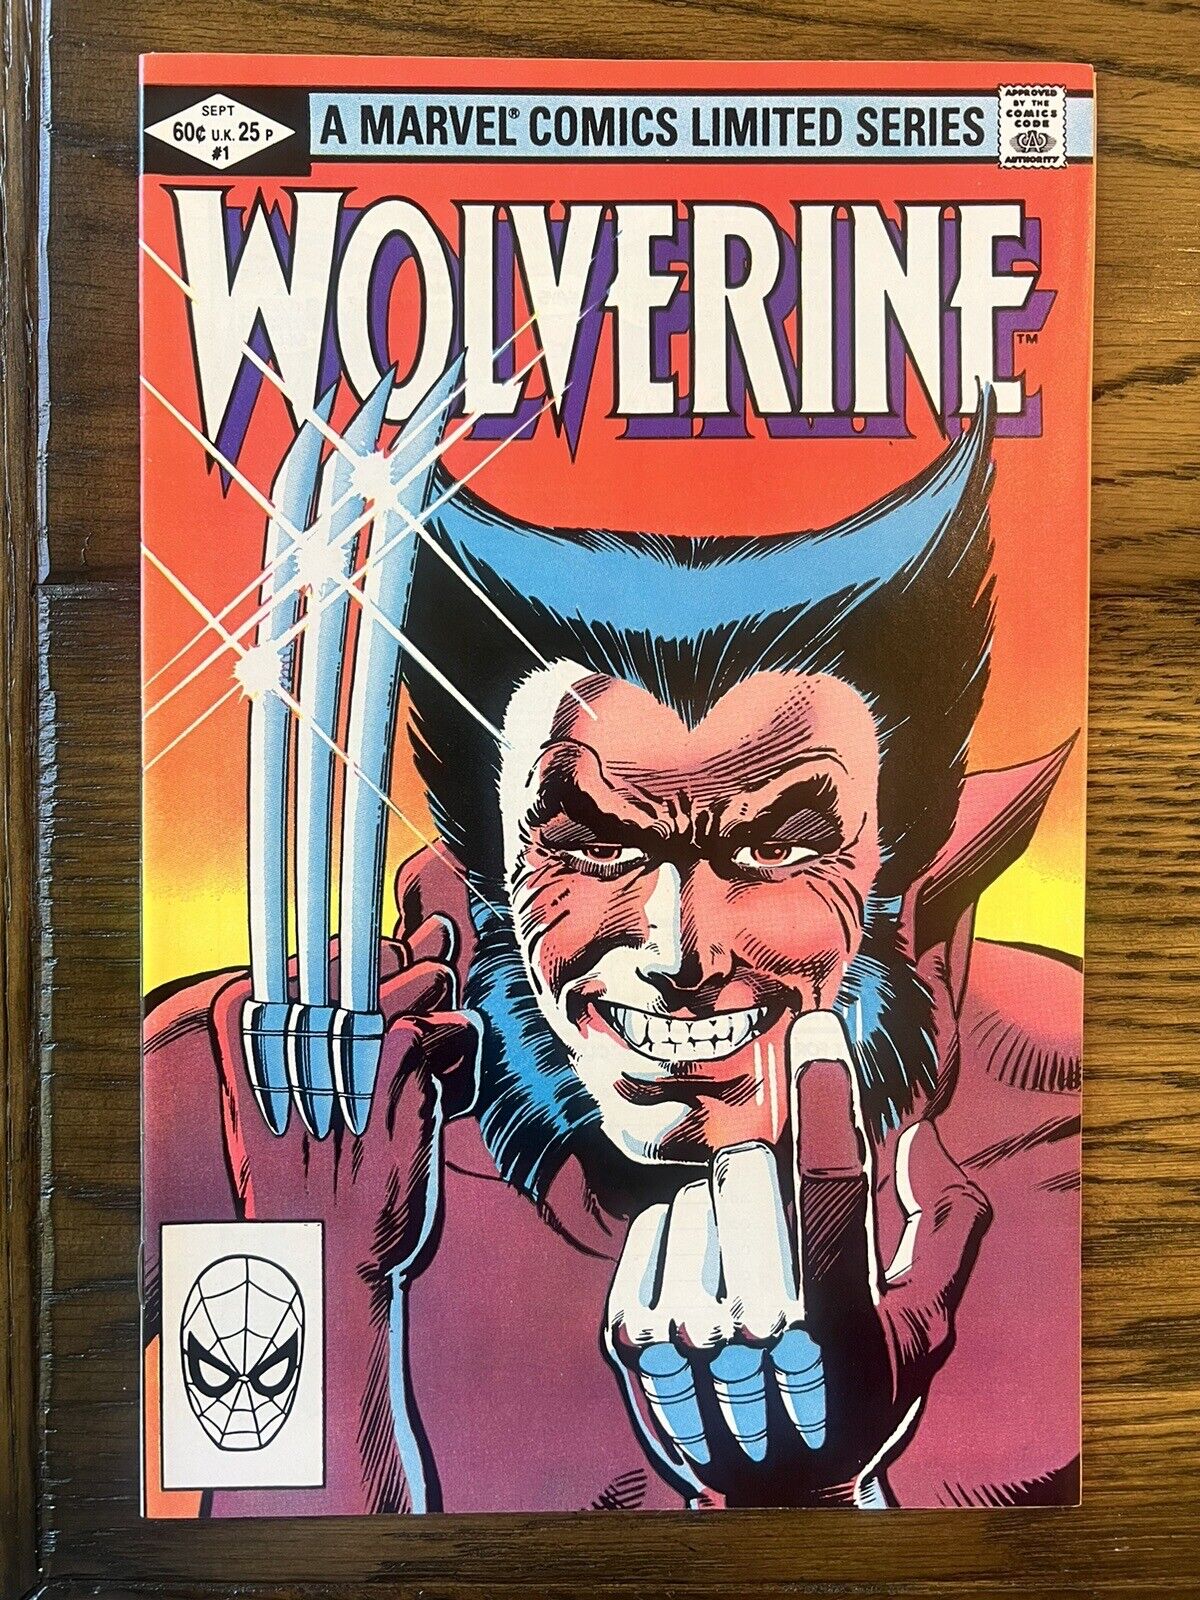 Wolverine 1, 1982 NM+ 9.6 + Copy.  Stunner